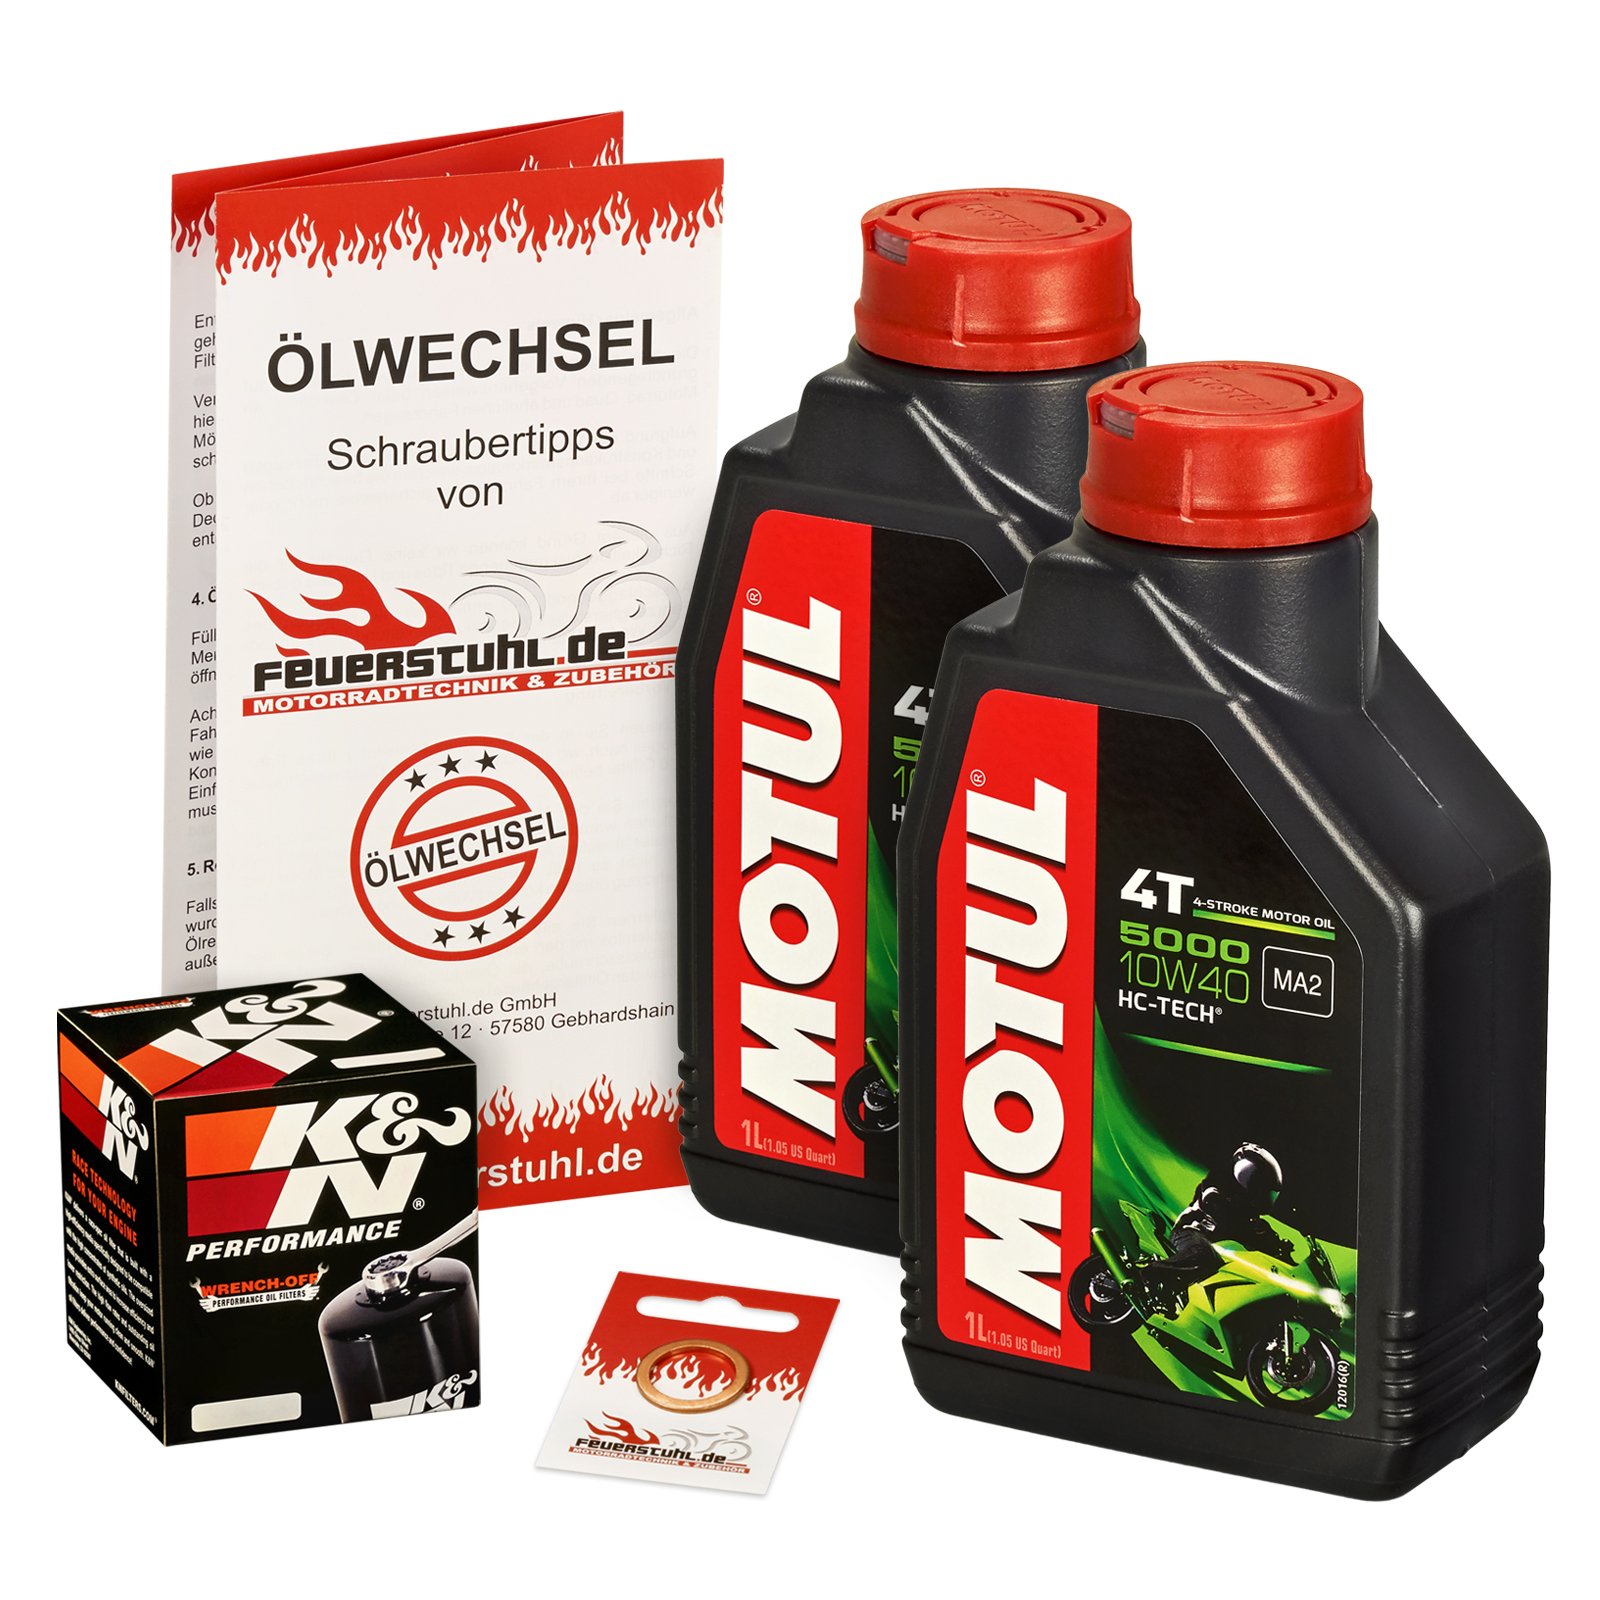 Motul 10W-40 Öl + K&N Ölfilter für Kawasaki KFX 700, 04-09 - Ölwechselset inkl. Motoröl, Filter, Dichtring von Feuerstuhl.de GmbH